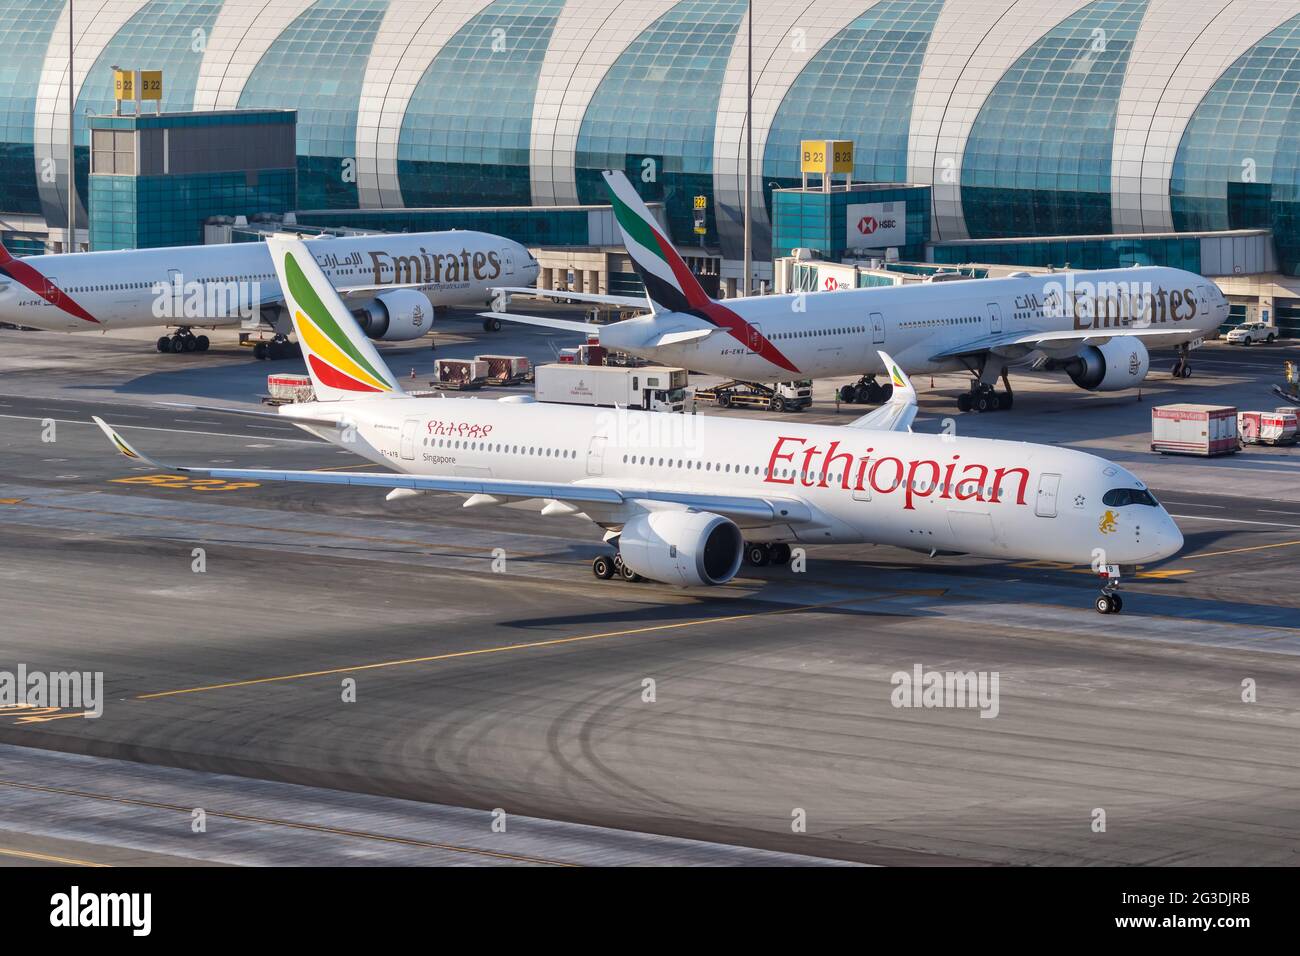 Dubai, United Arab Emirates - May 27, 2021: Ethiopian Airlines Airbus A350-900 airplane at Dubai airport (DXB) in the United Arab Emirates. Stock Photo